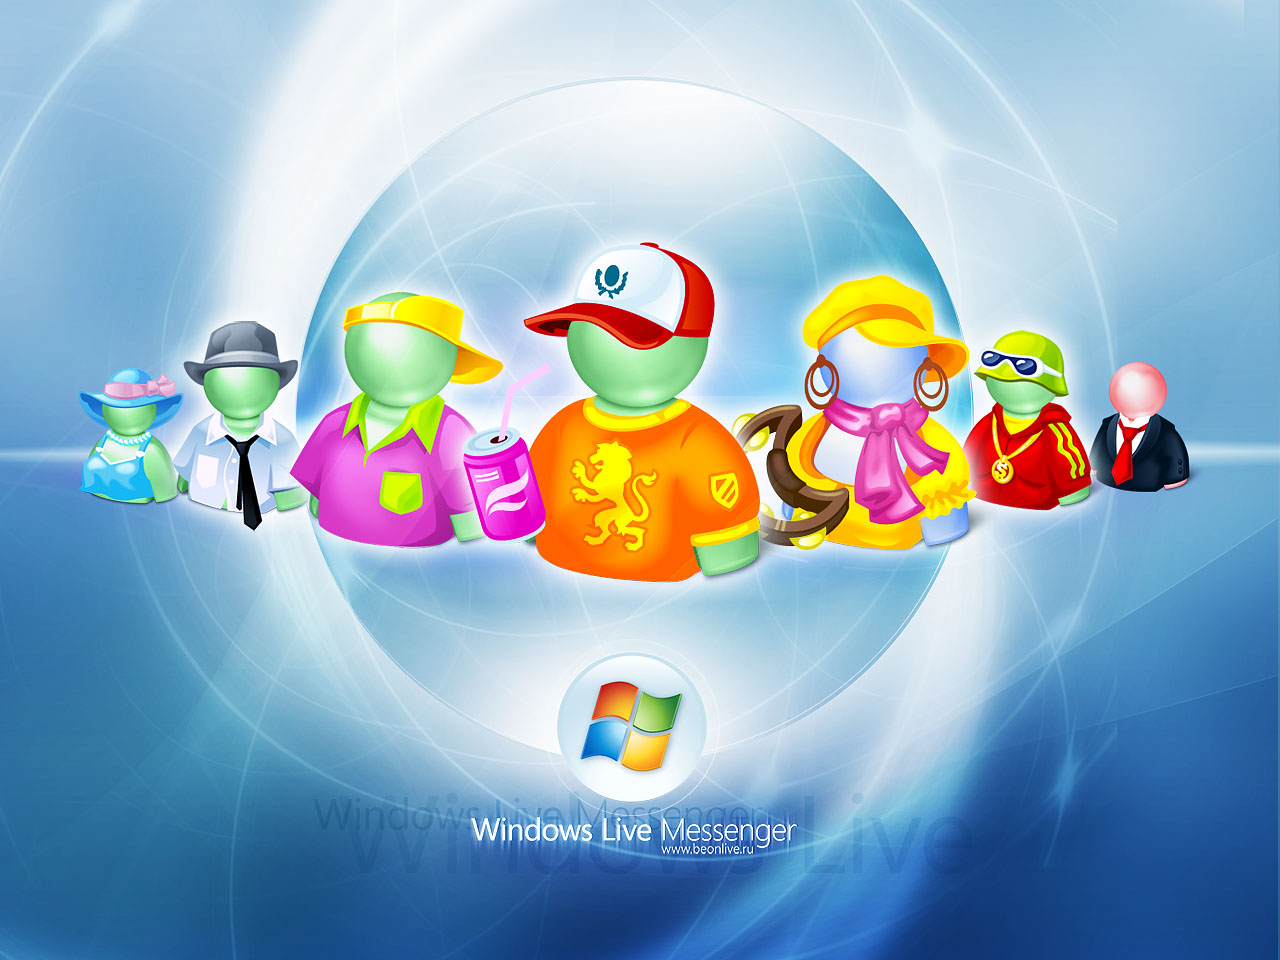 Desktop Wallpaper Gallery Computers Windows Live Messenger